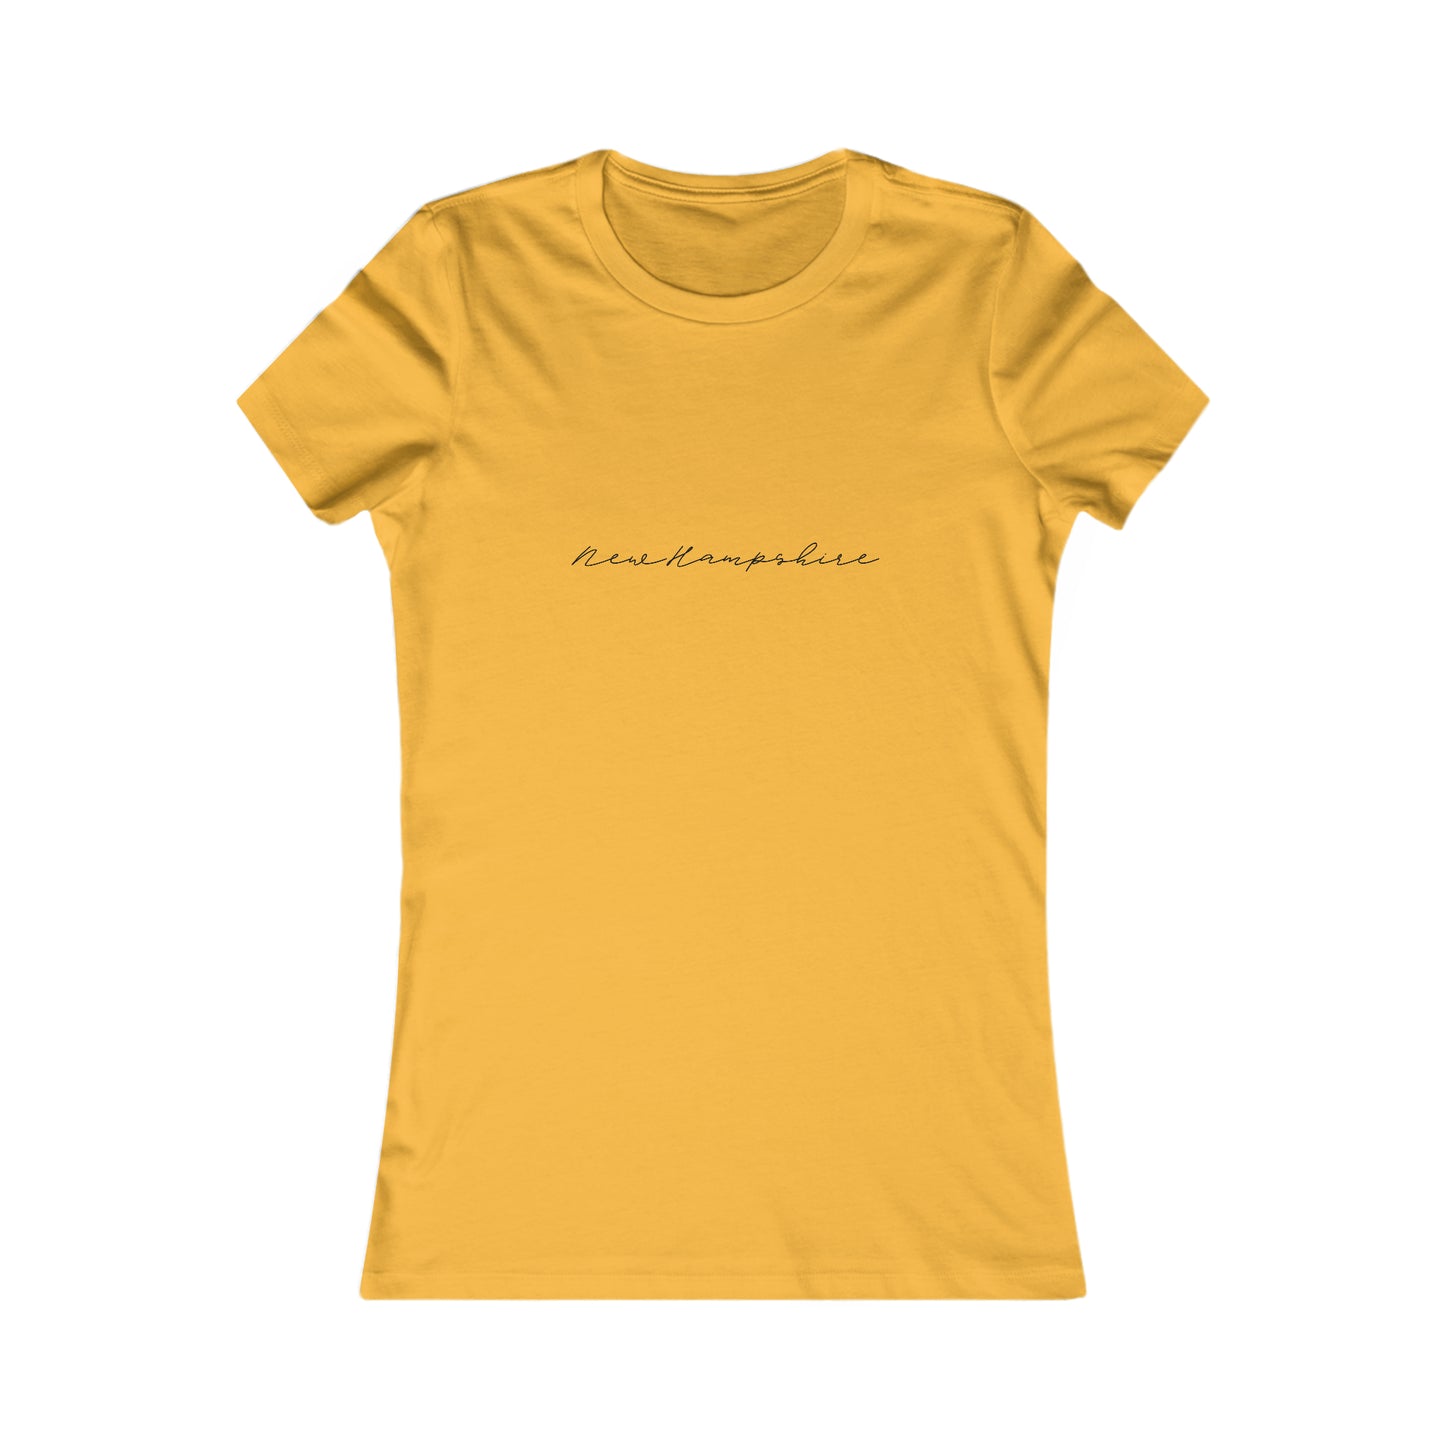 New Hampshire Cursive Women's Shirt